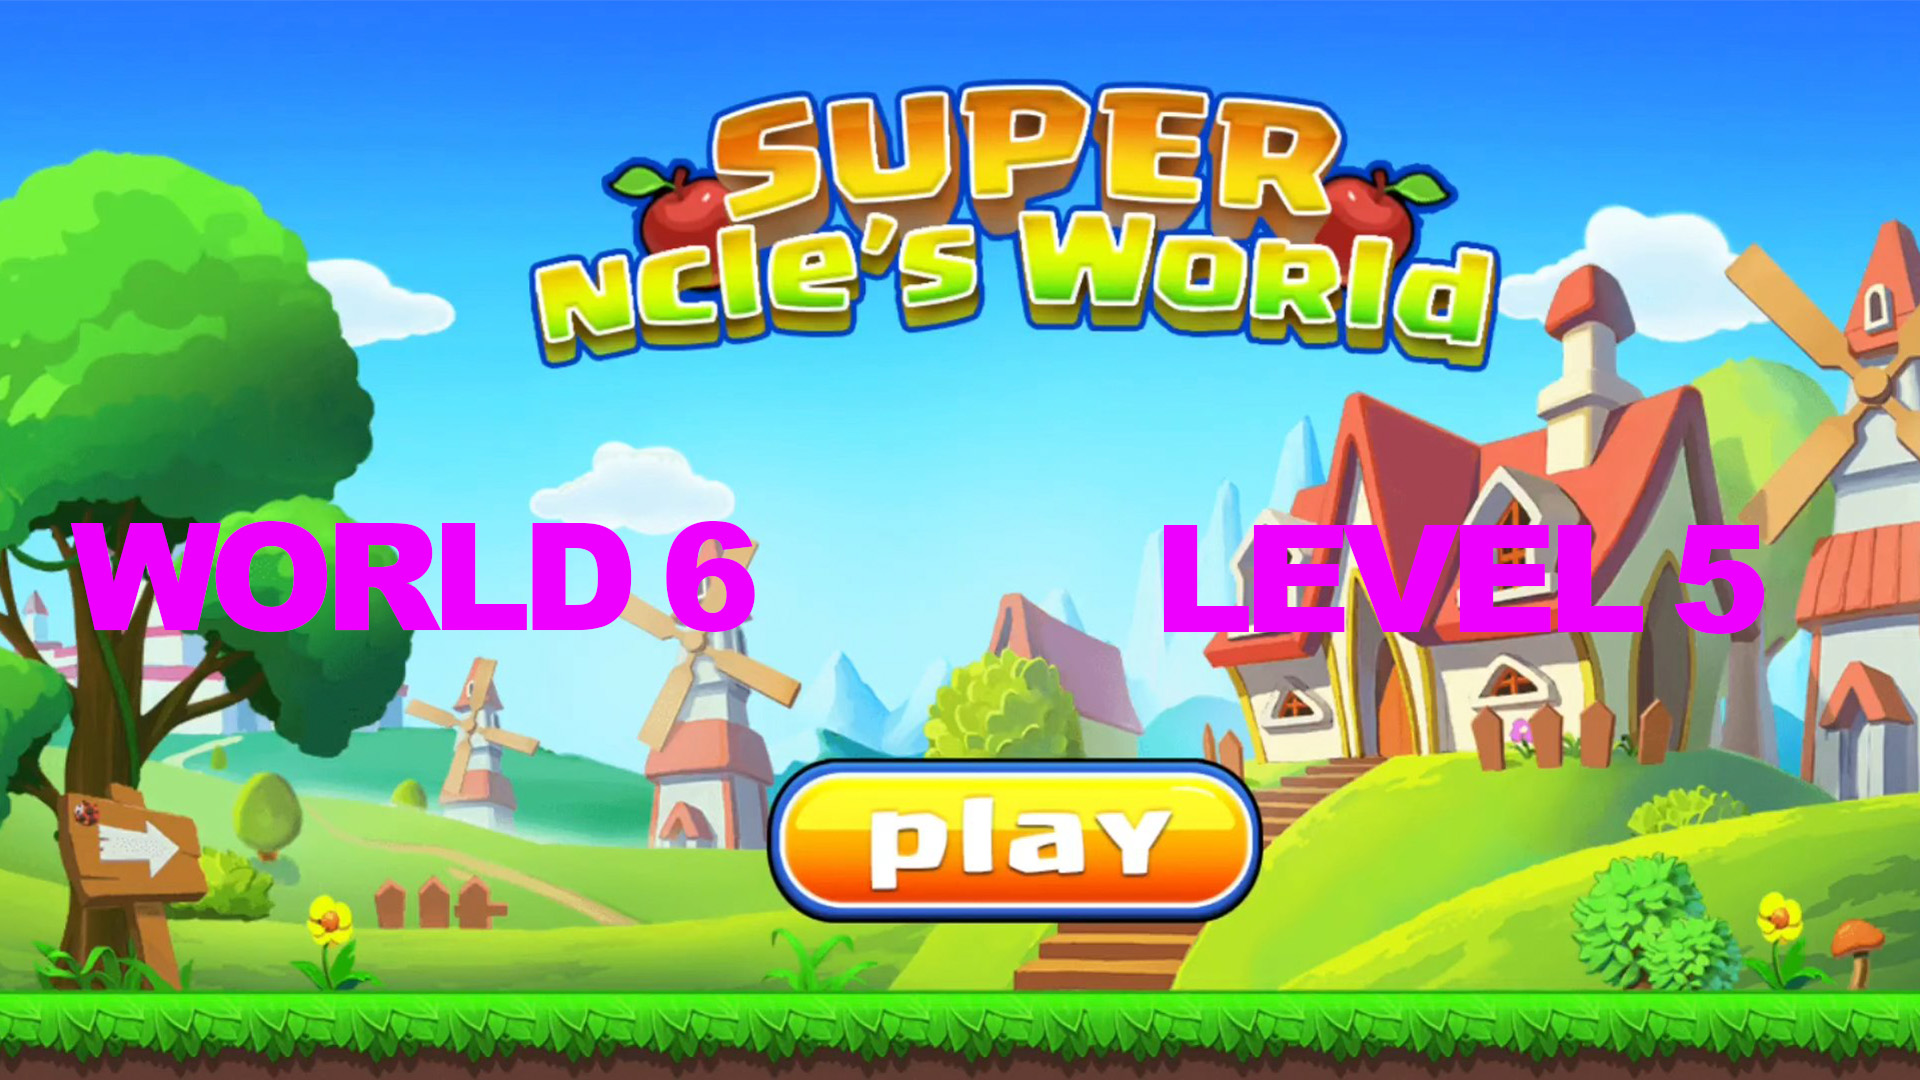 Super ncle's  World 6. Level 5.